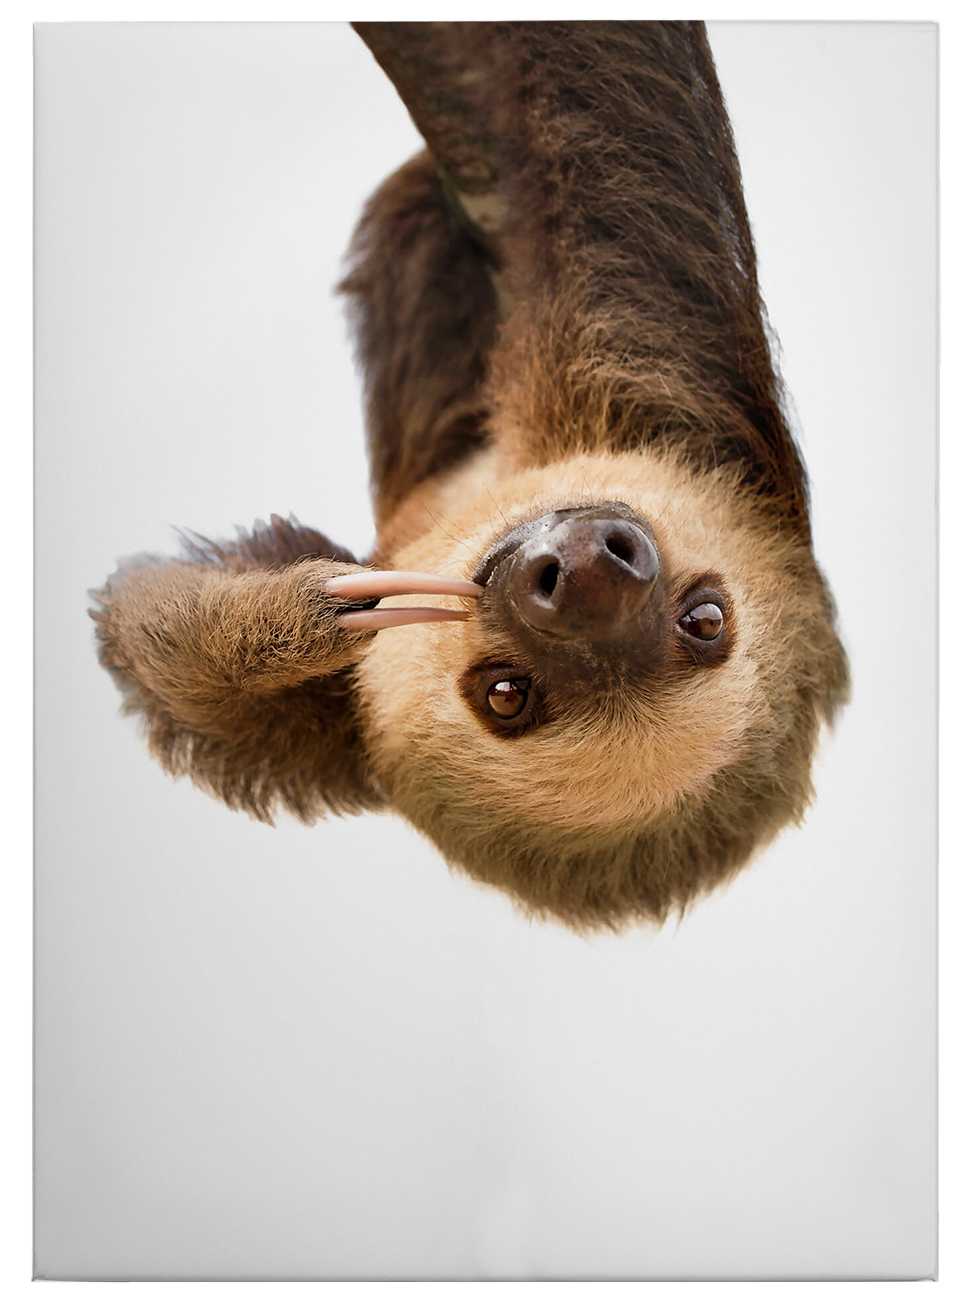             Canvas print sloth hanging upside down
        